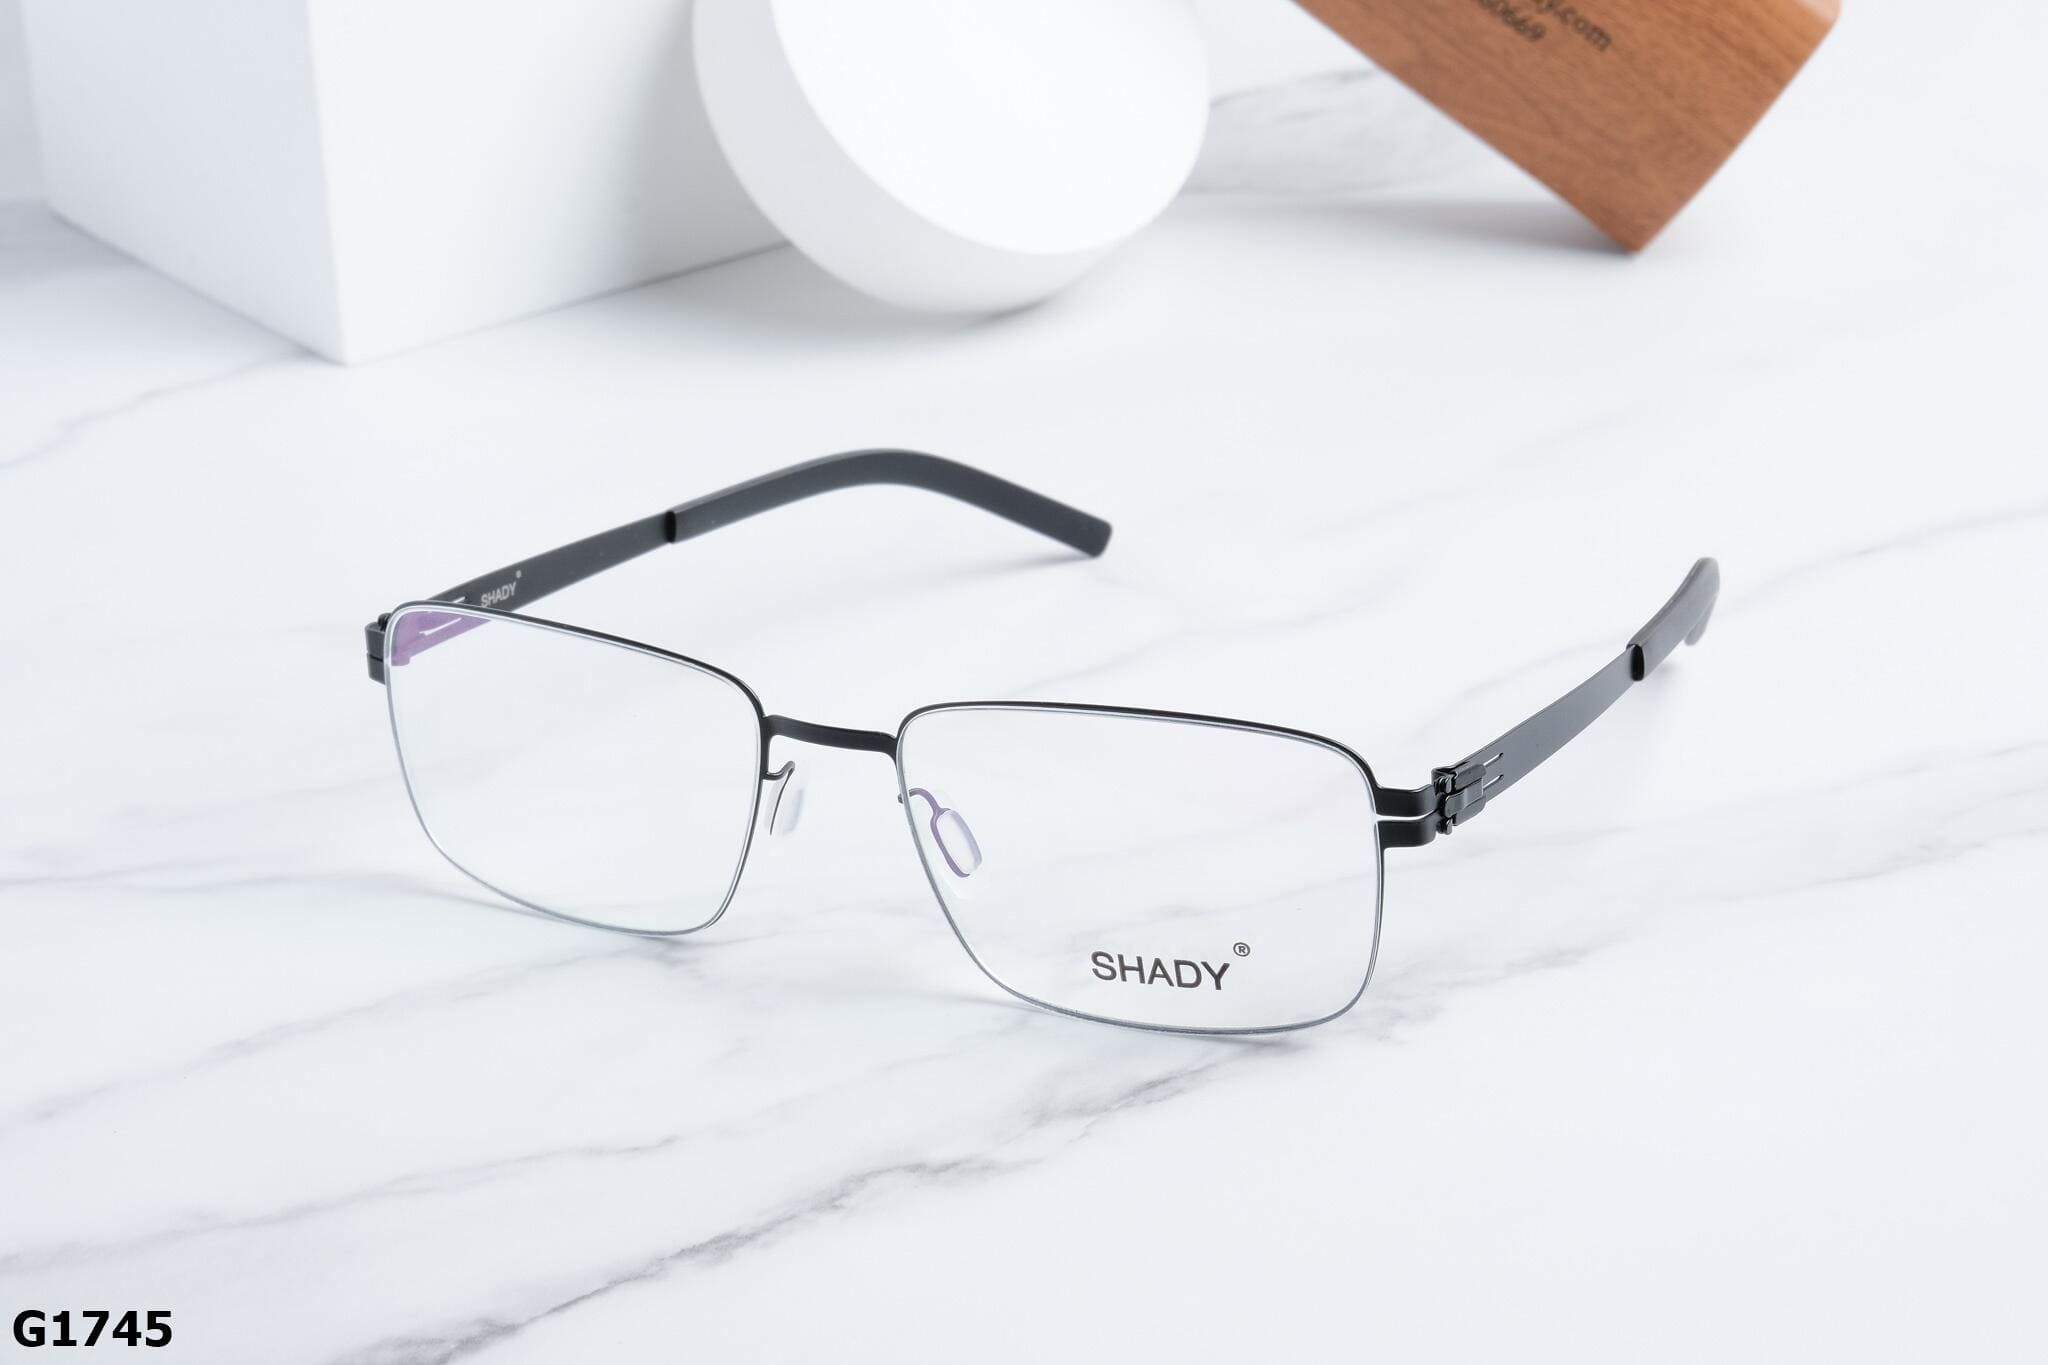  SHADY Eyewear - Glasses - G1745 